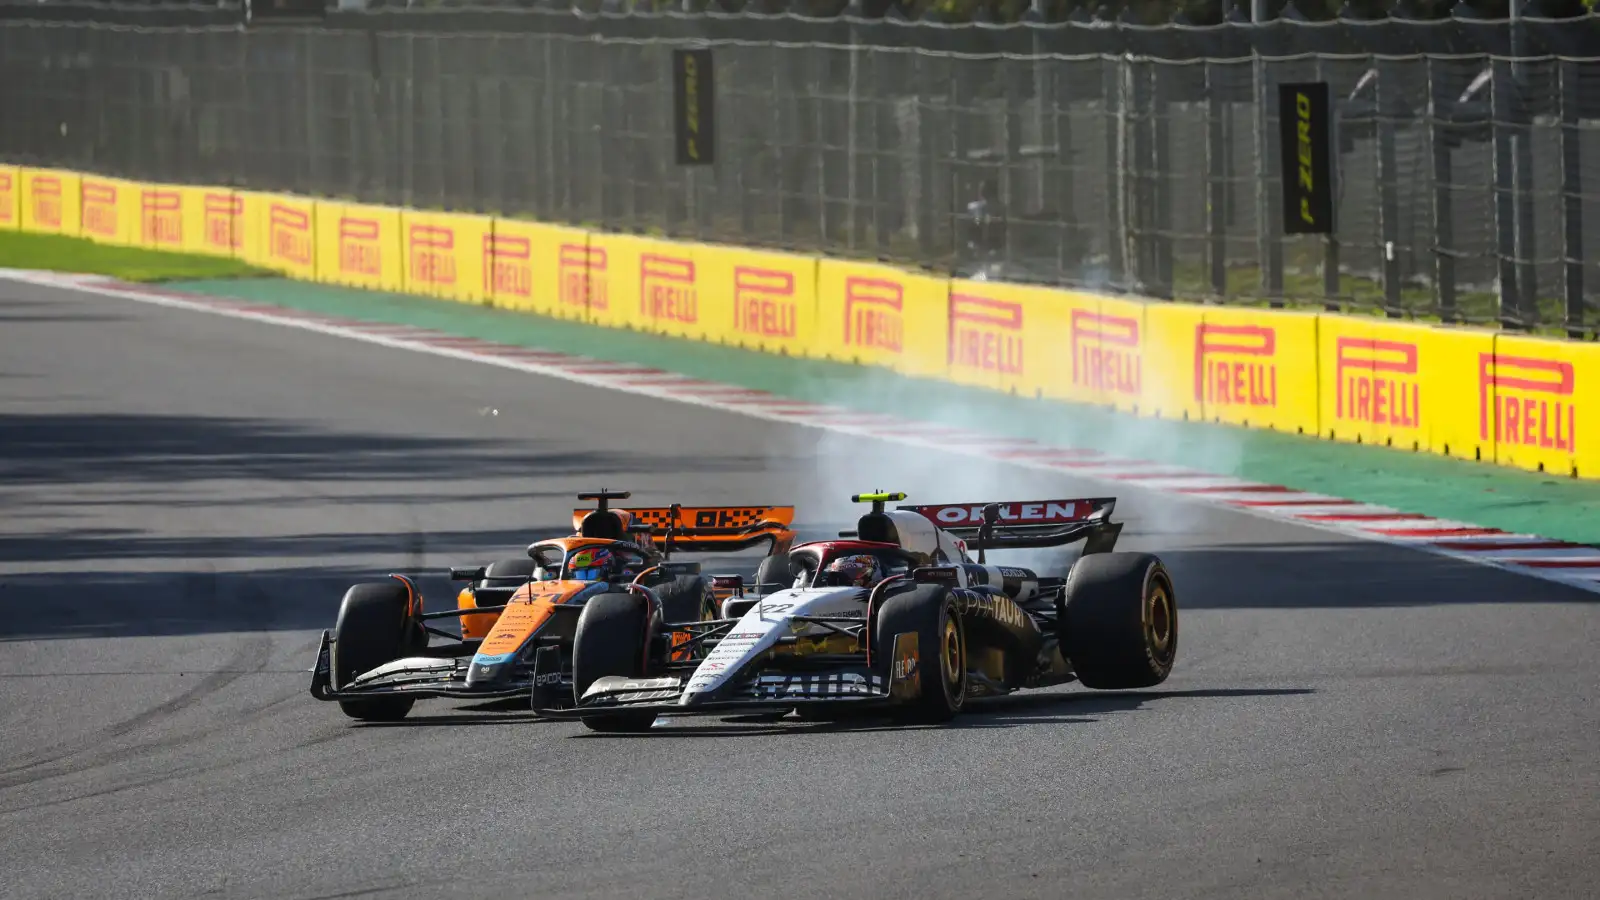 Contact between Oscar Piastri and Yuki Tsunoda during the Mexican Grand Prix.